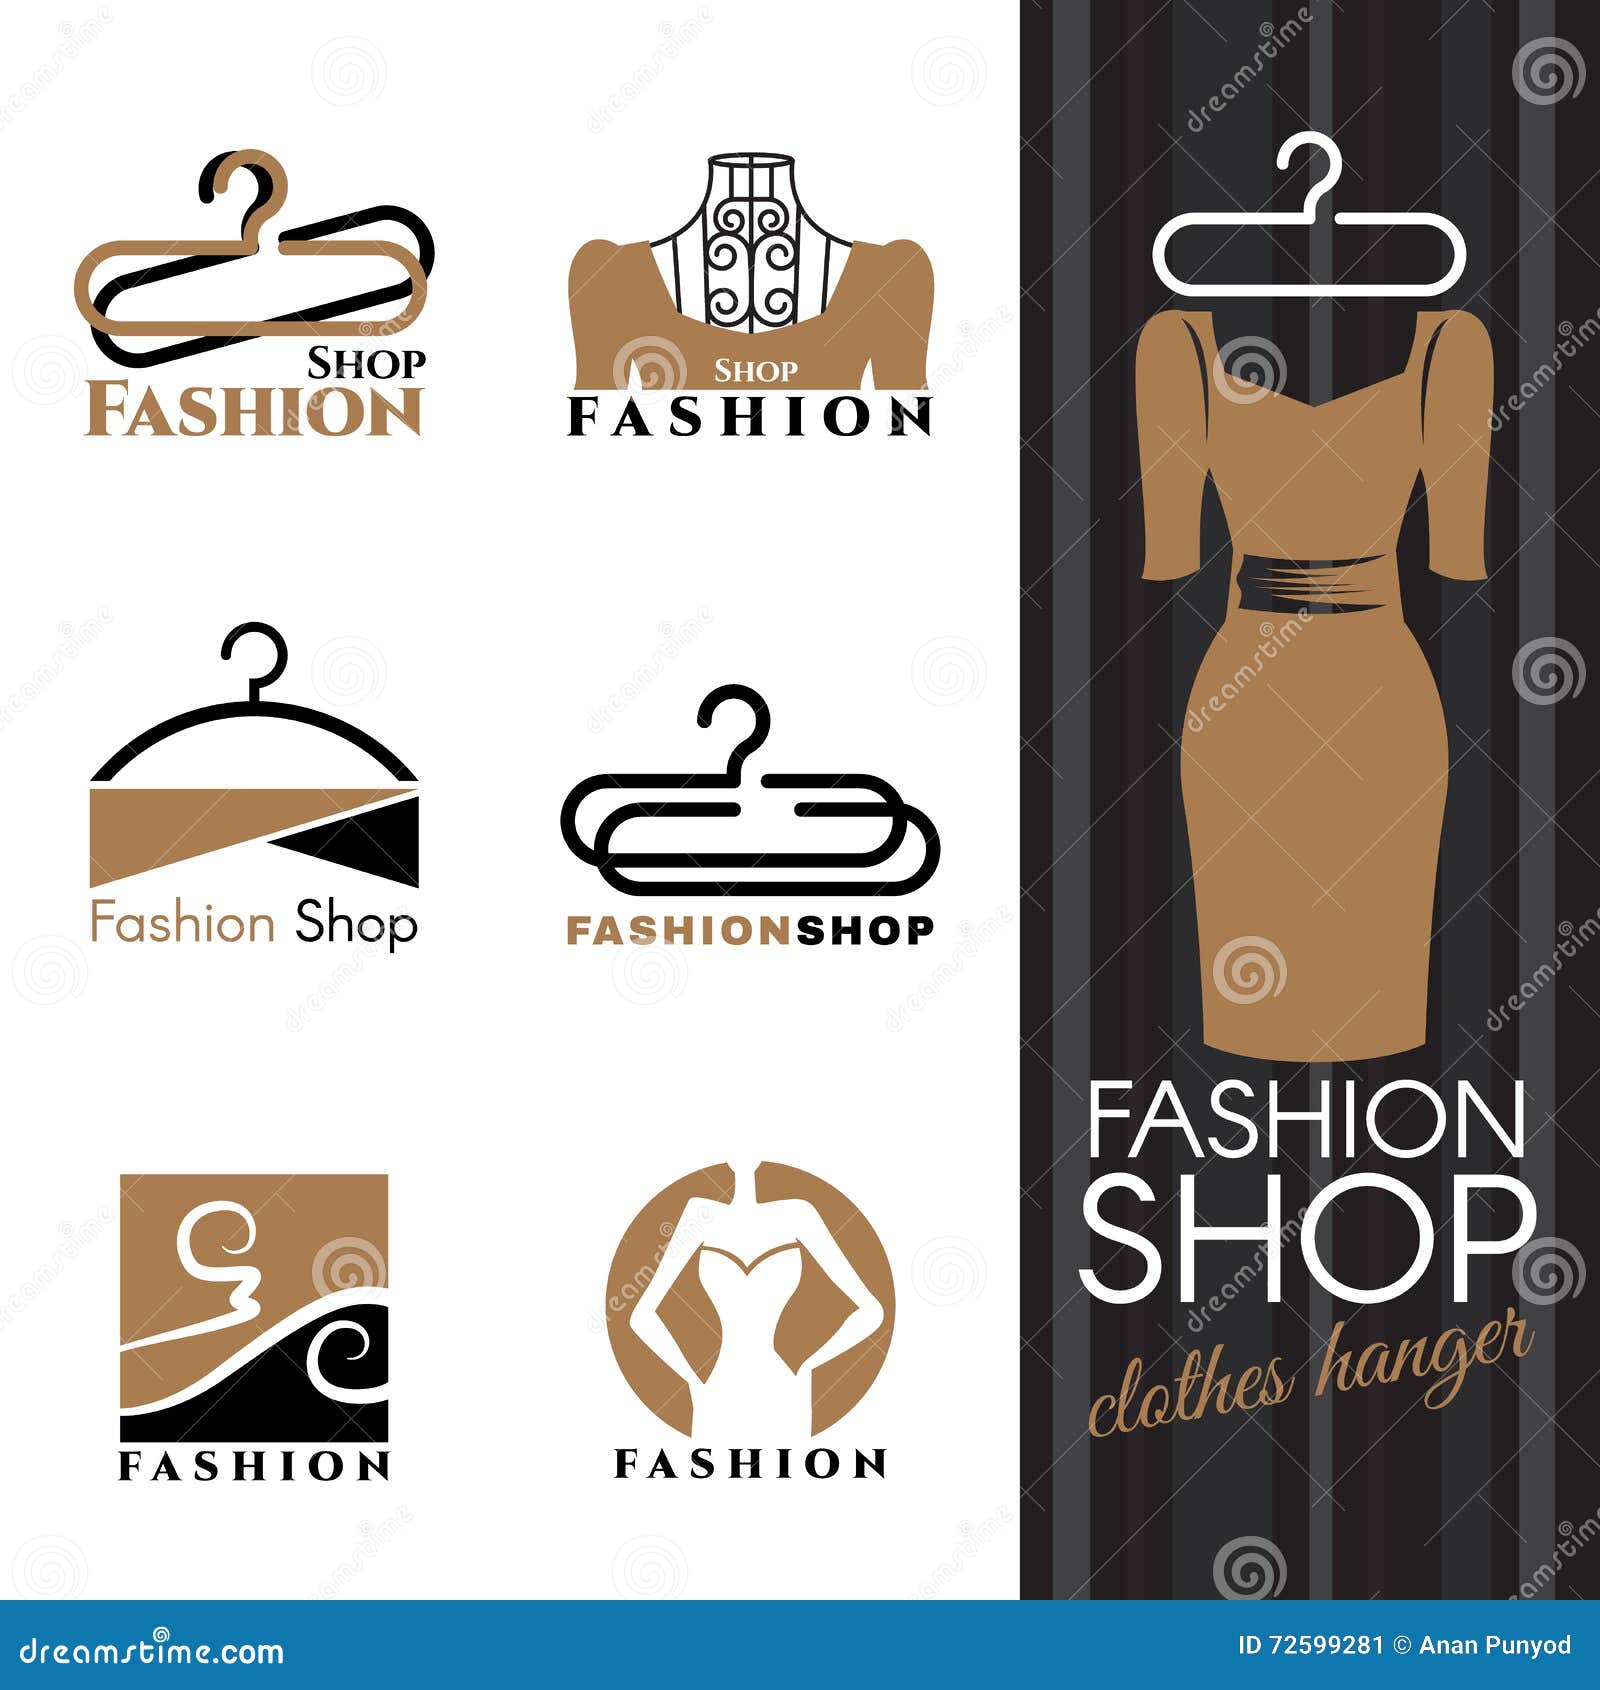 Fashion Shop Logo - Brown Dress and Clothes Hanger Vector Set Design ...